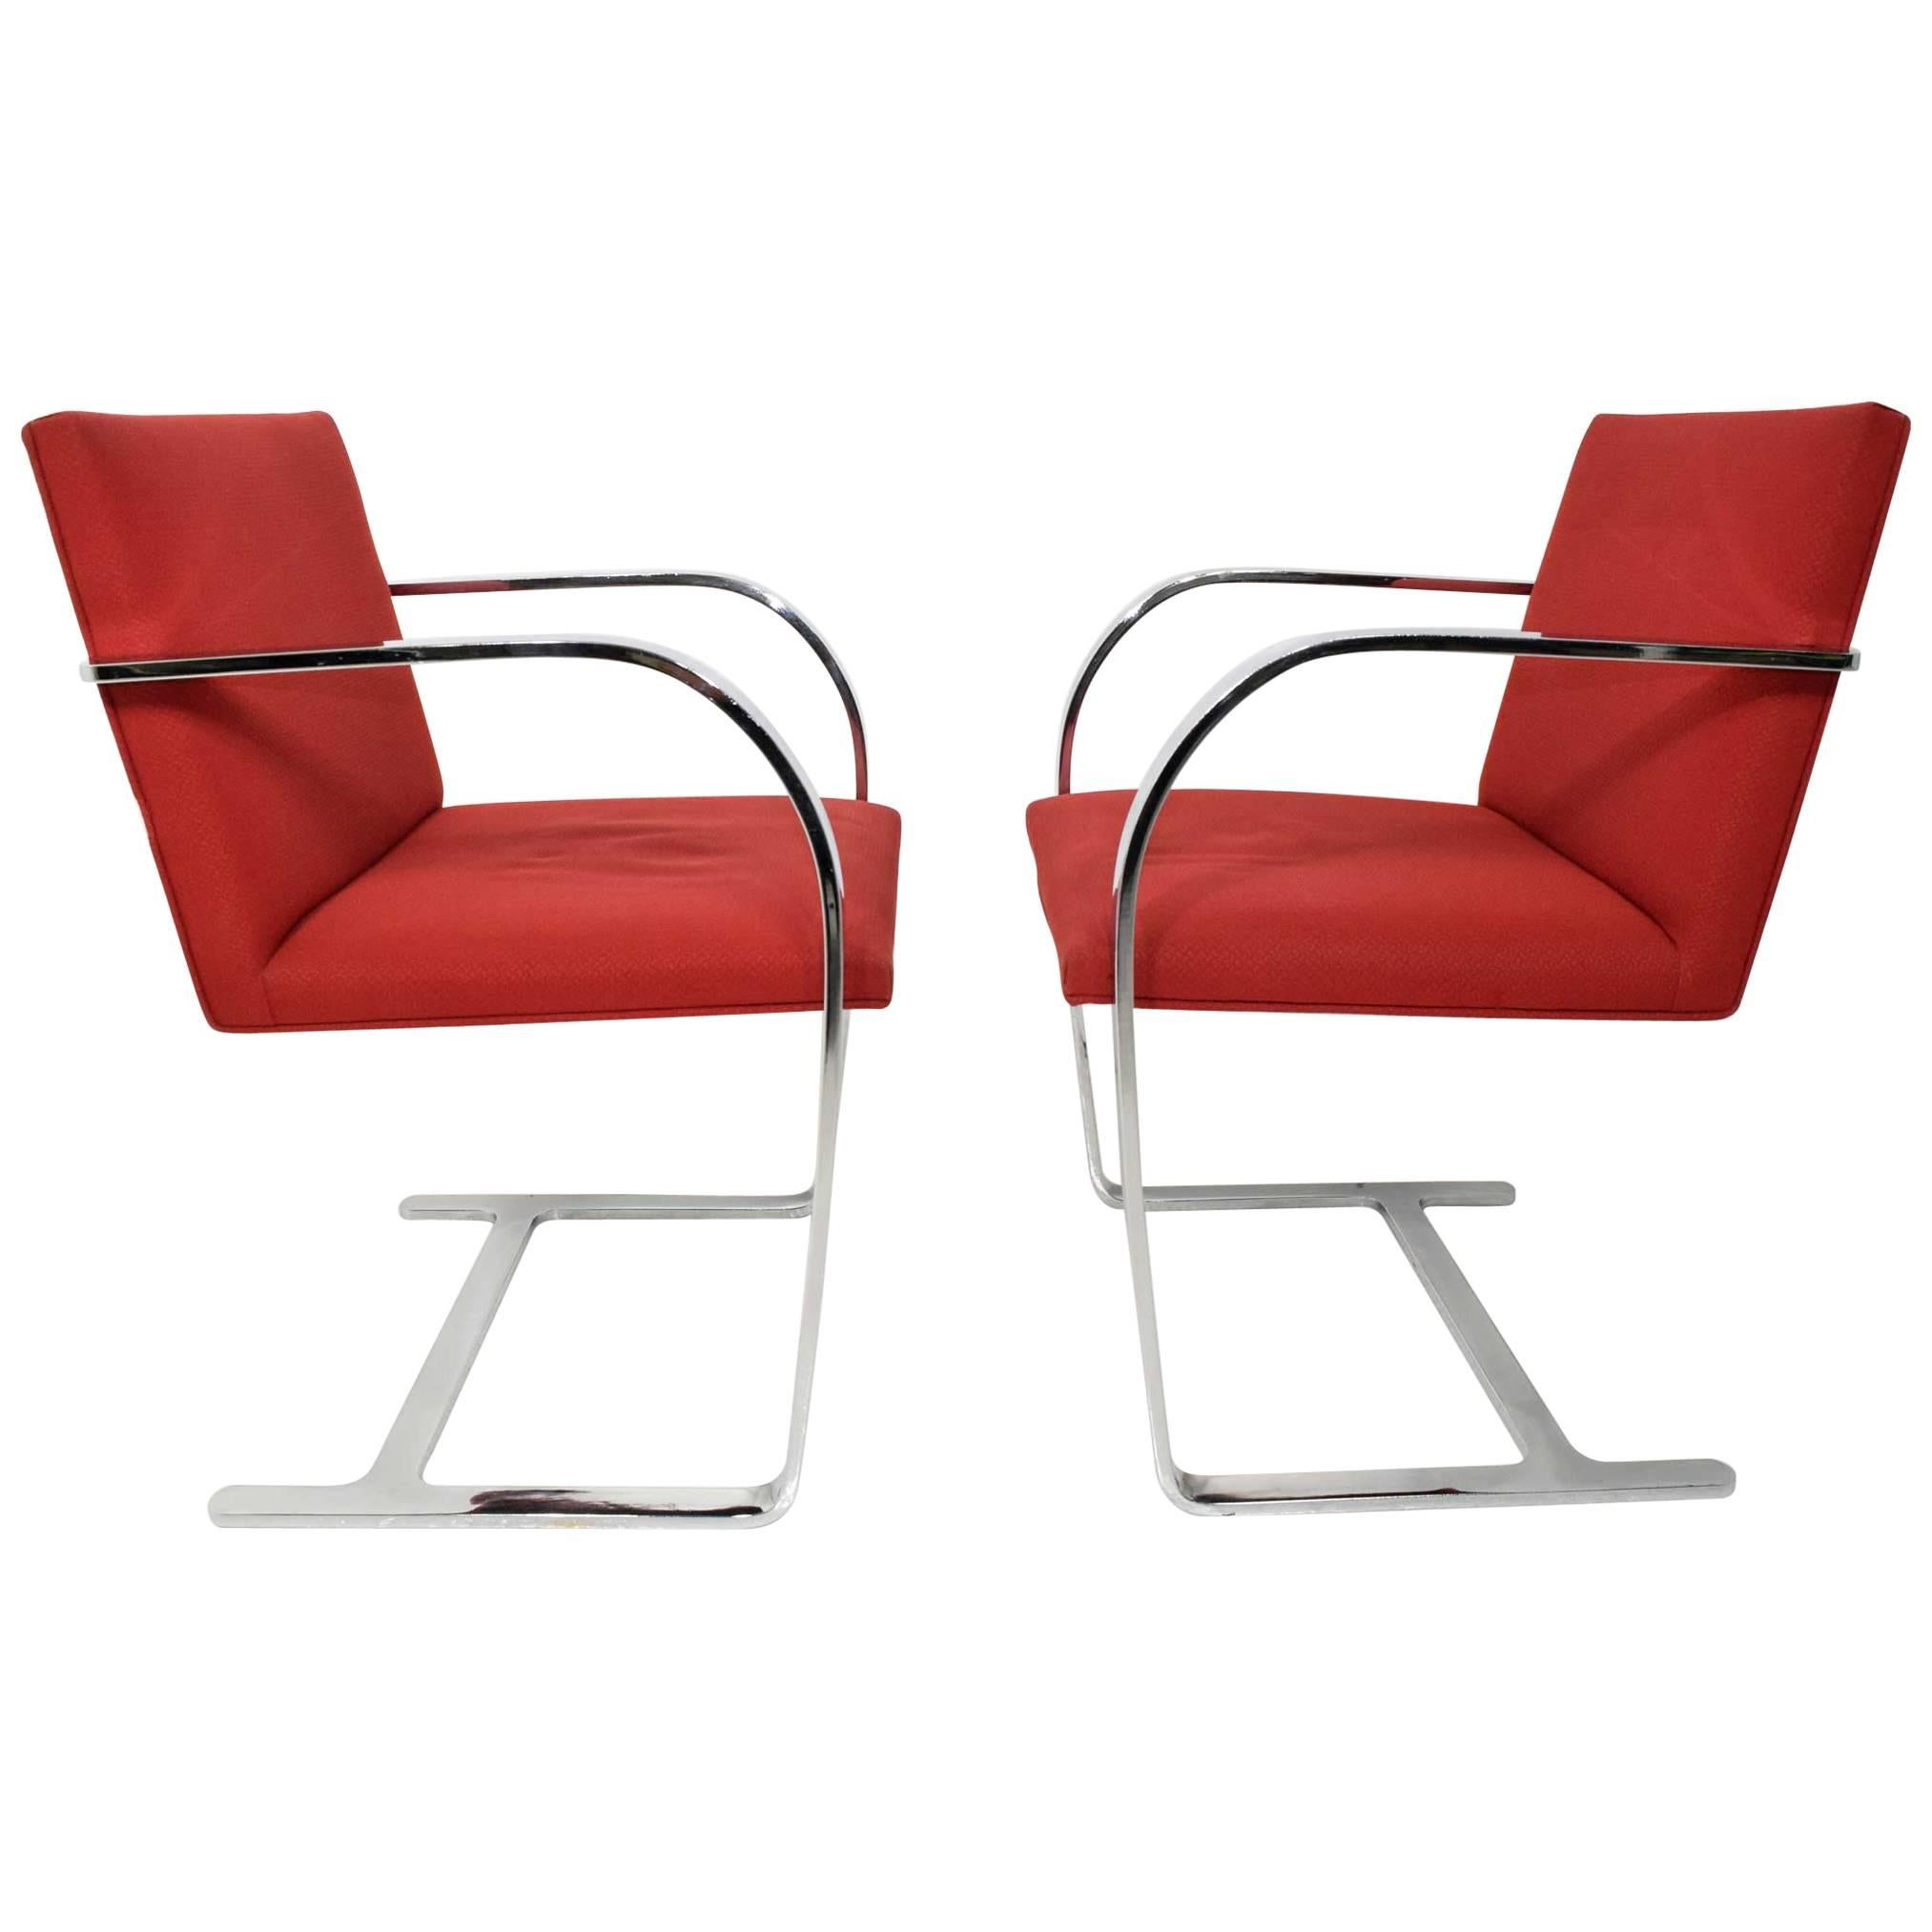 Pair of Brno Chairs by Gordon International